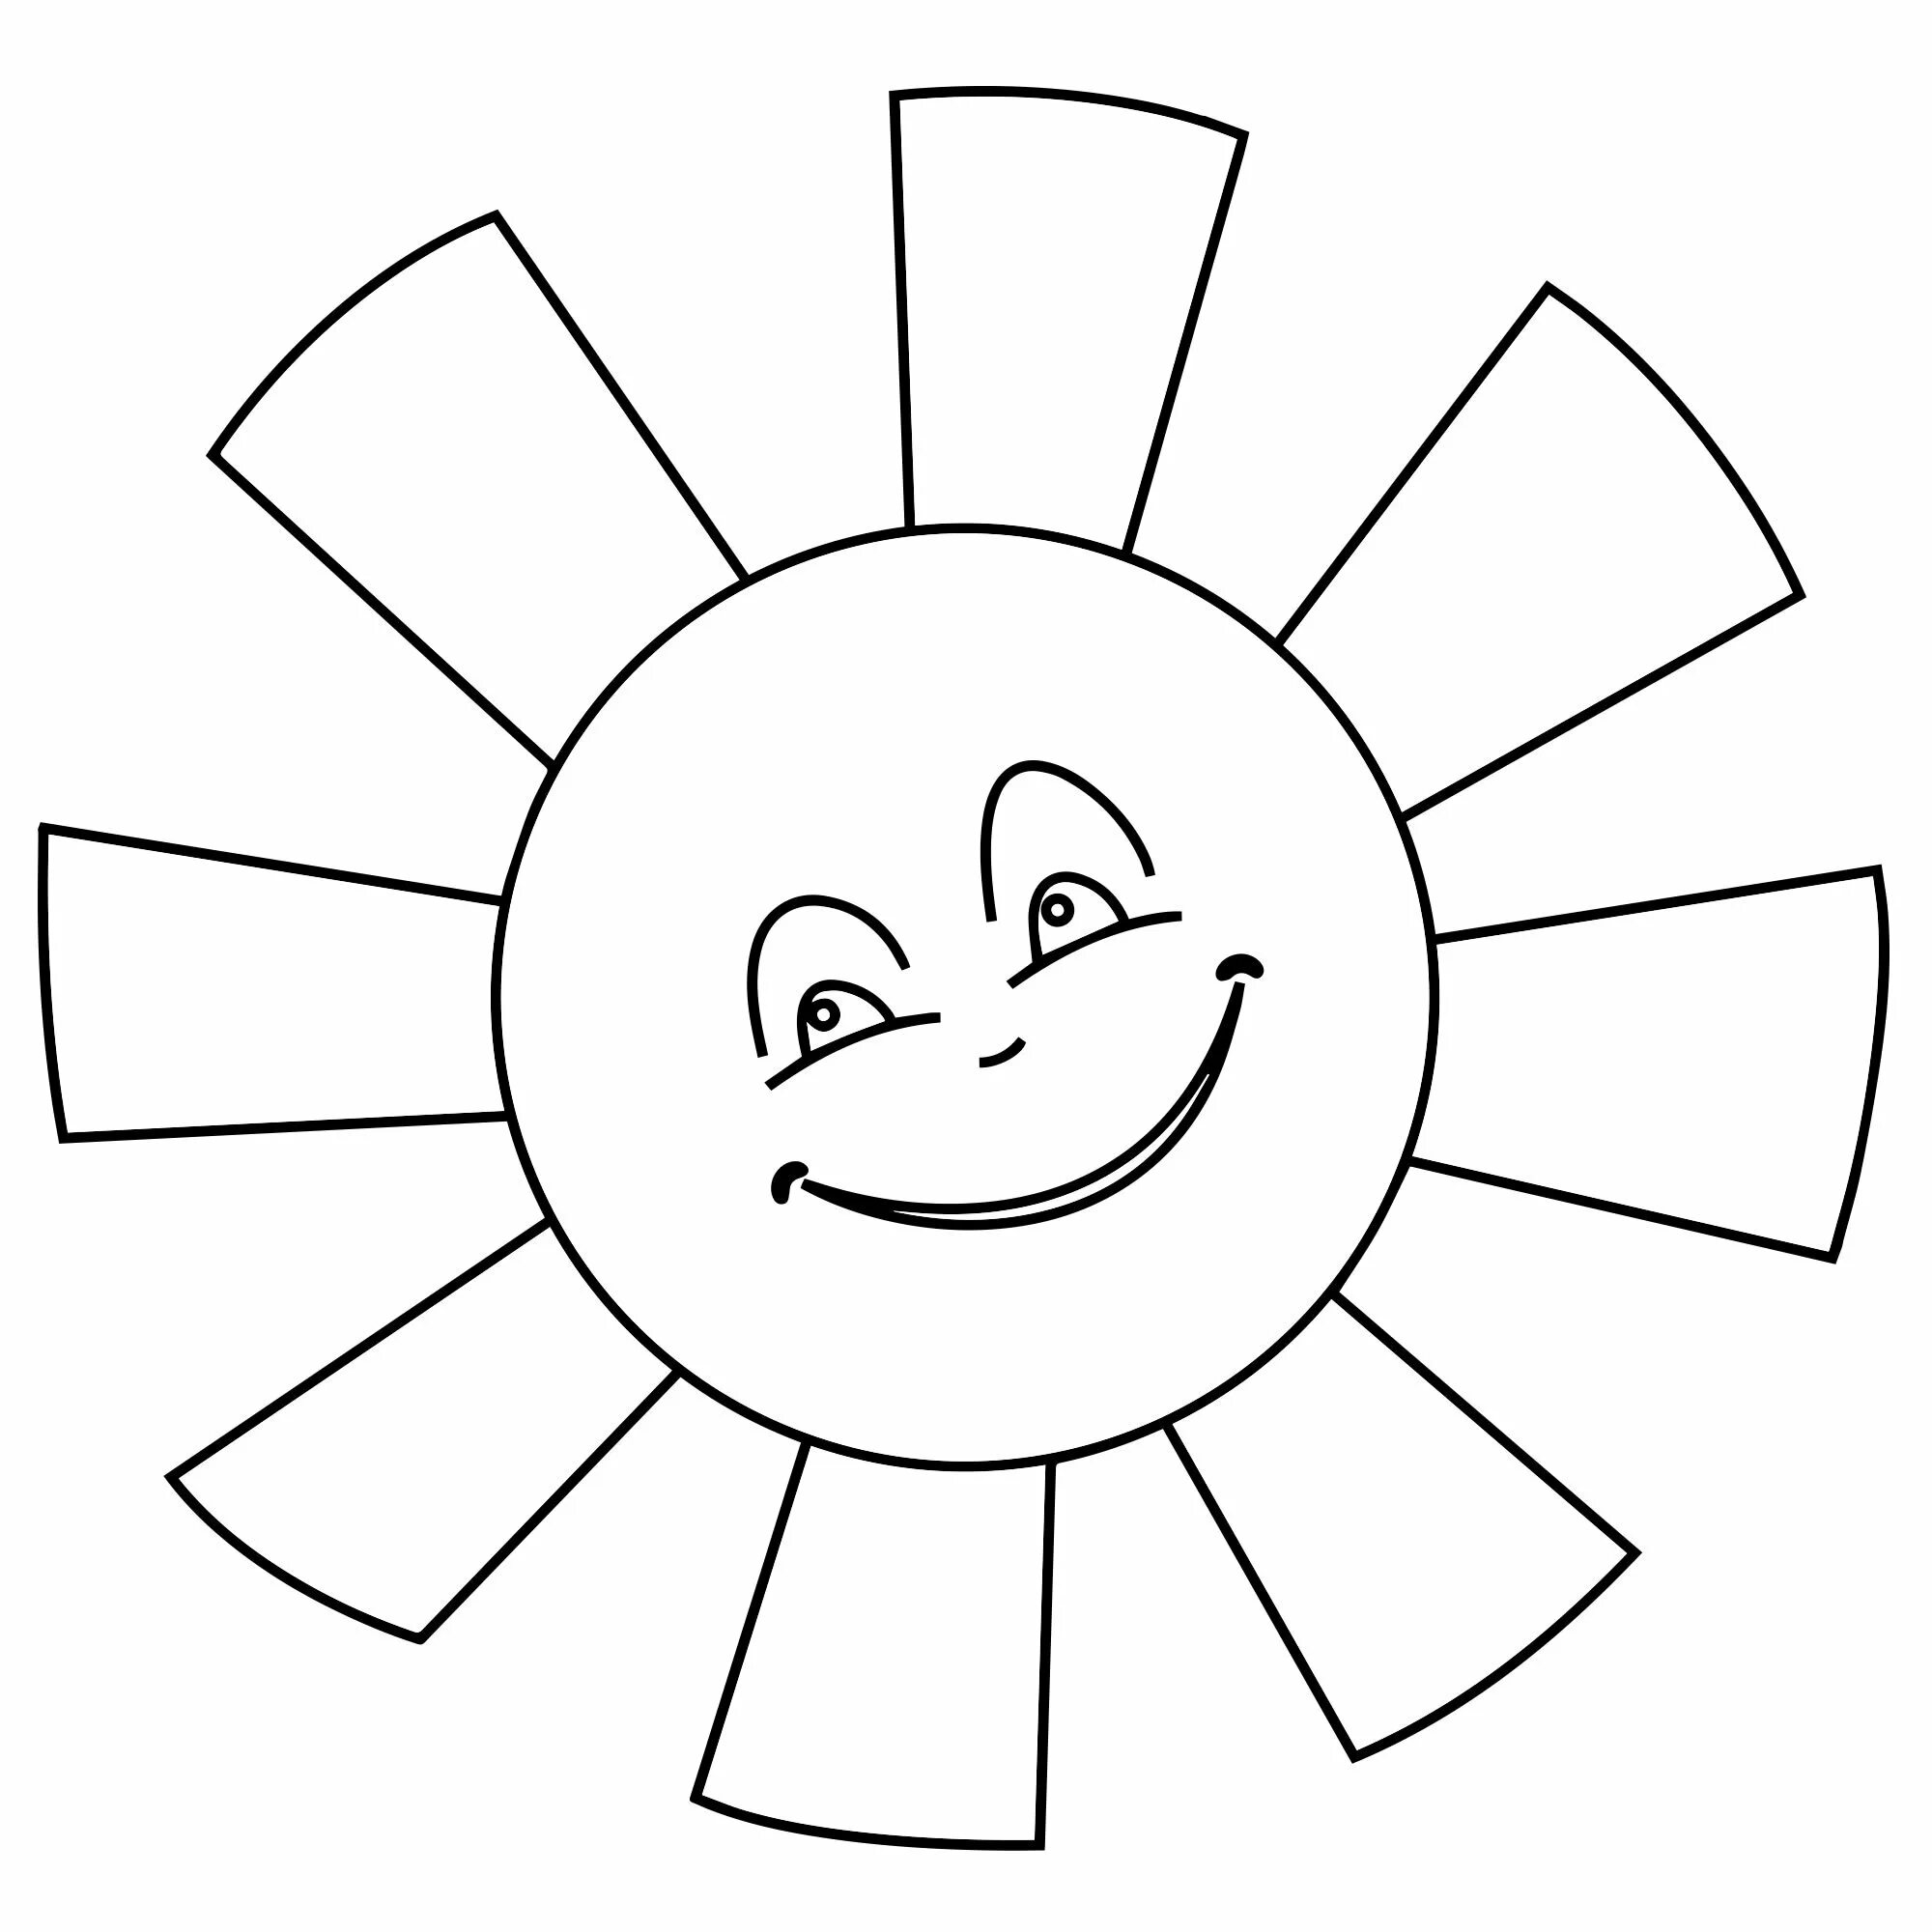 Раскраска. Солнышко. Солнце раскраска для детей. Солнышко рисунок. Солнышко раскраска для малышей. Раскраски для детей 3 лет солнышко